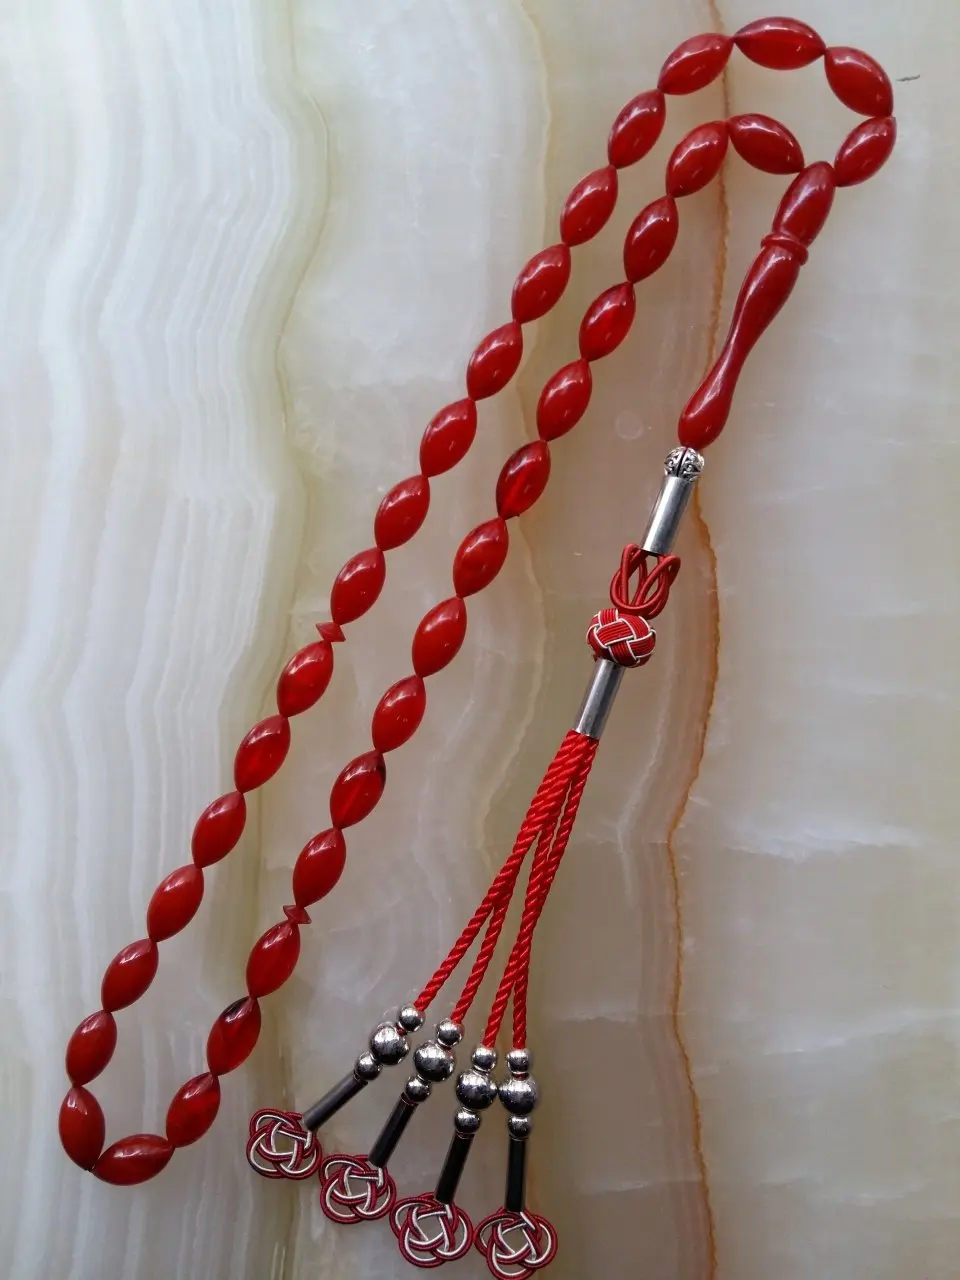 Islam Tespih Muslim Rosary Beads 33 Prayer Rosary   for Men Bracelet For Men Accessories  amber stone Handmade Made in turkey